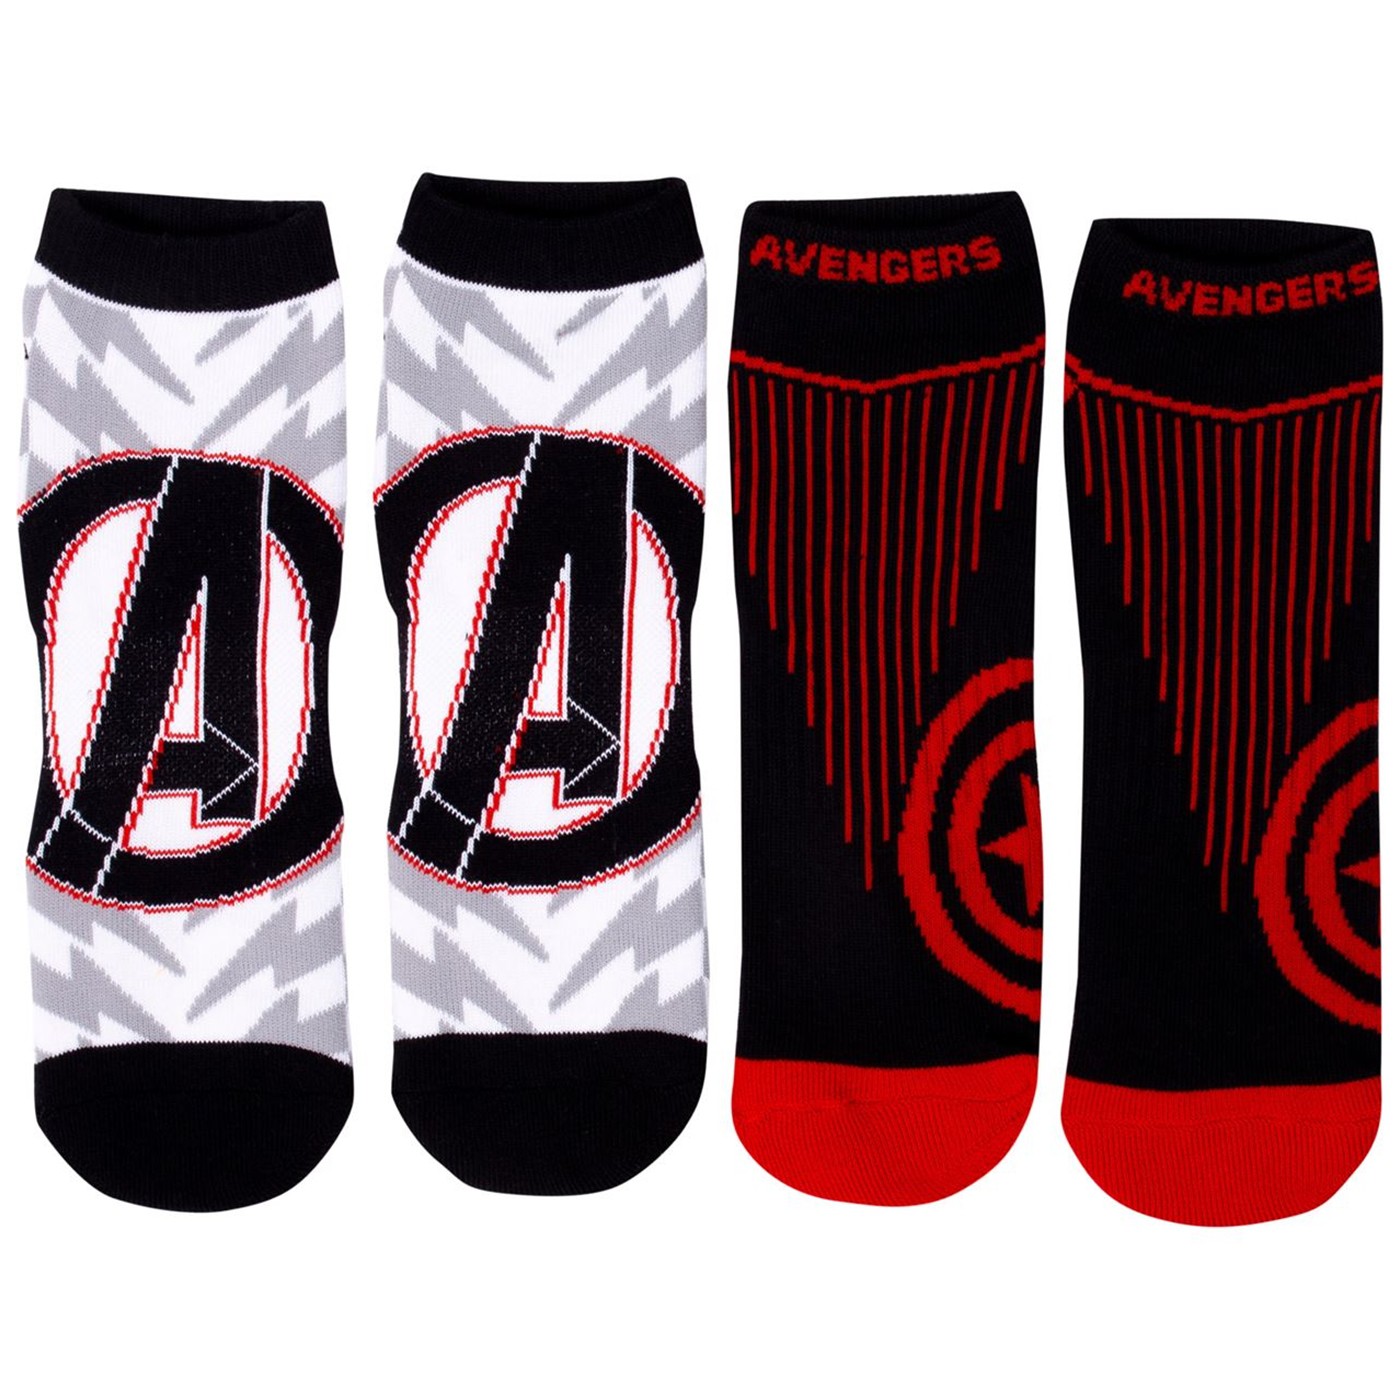 Avengers Endgame Initiative Two Pair No-Show Athletic Socks